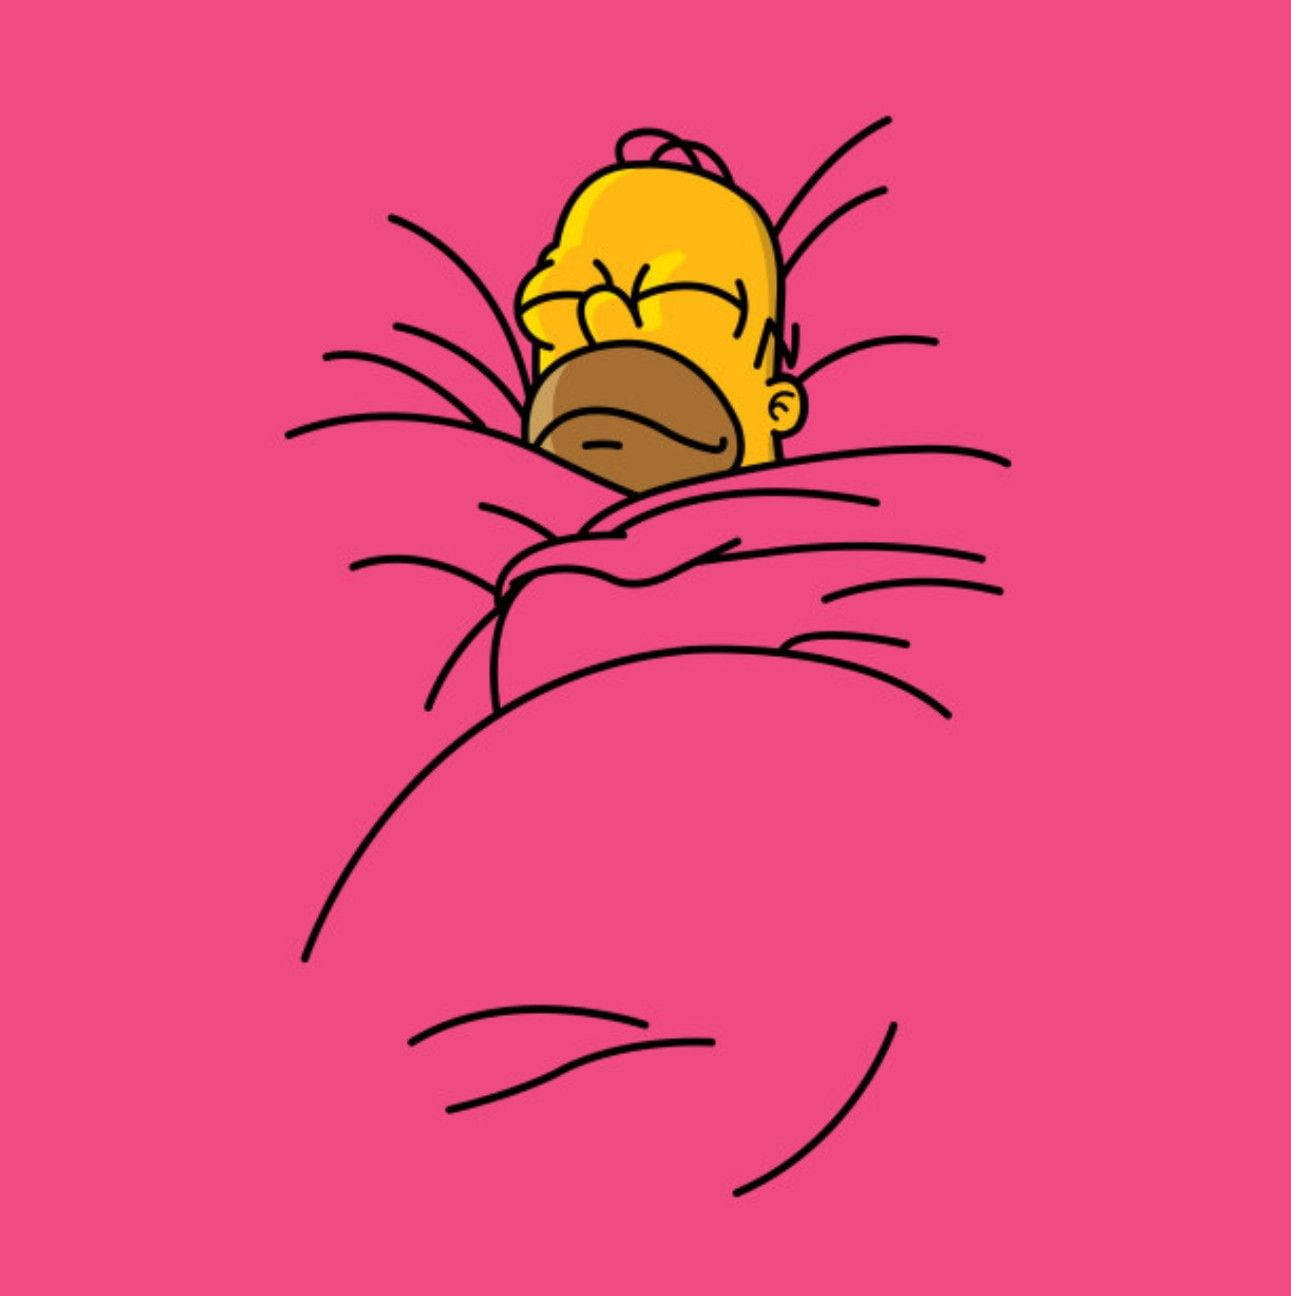 Download Sleeping Homer Simpson Wallpaper